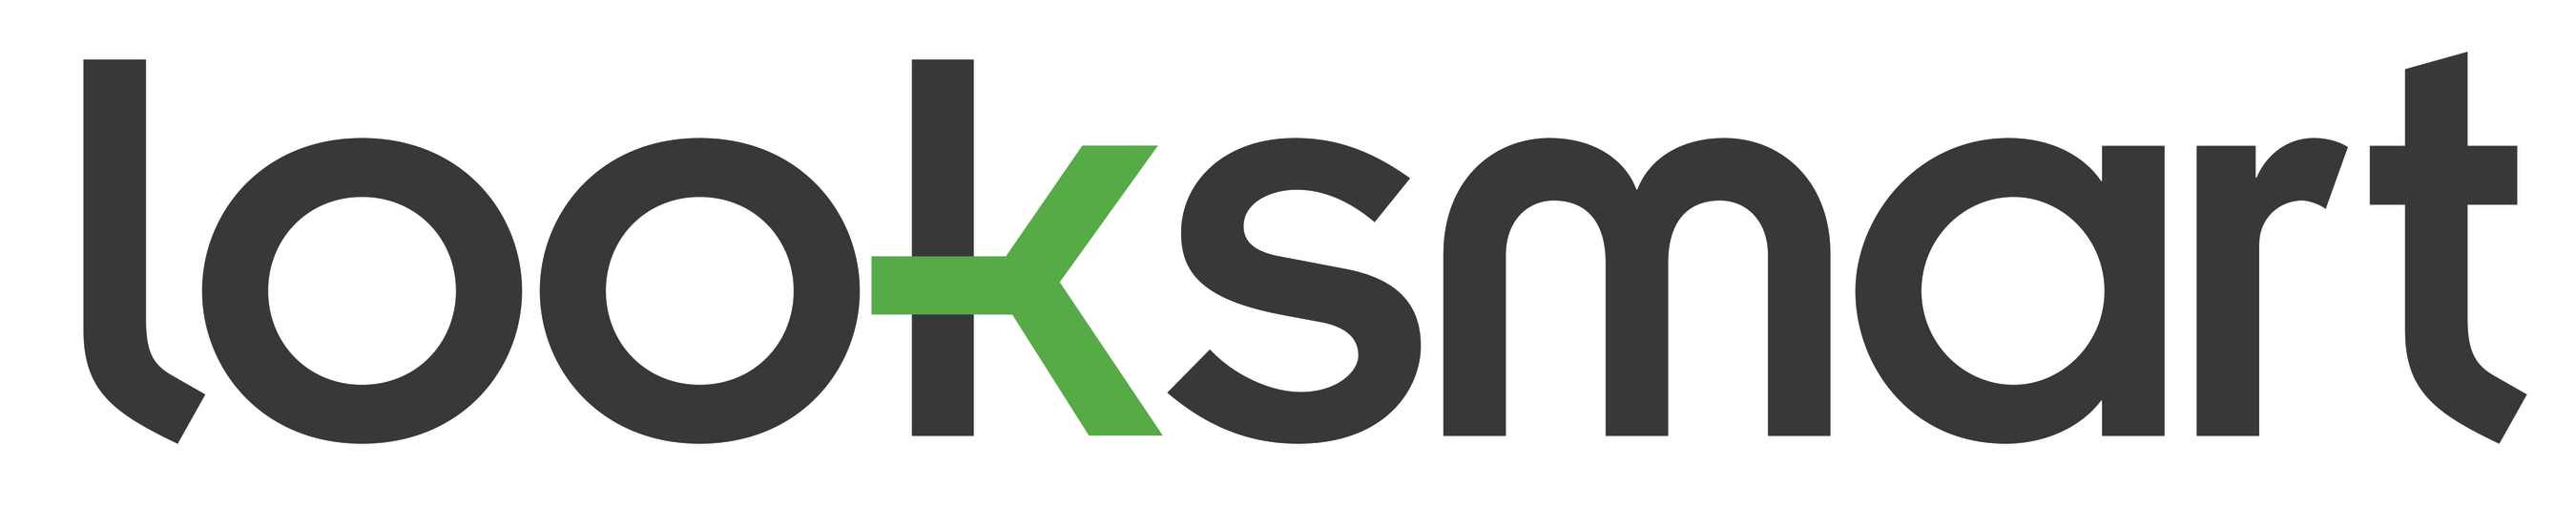 LookSmart logo.